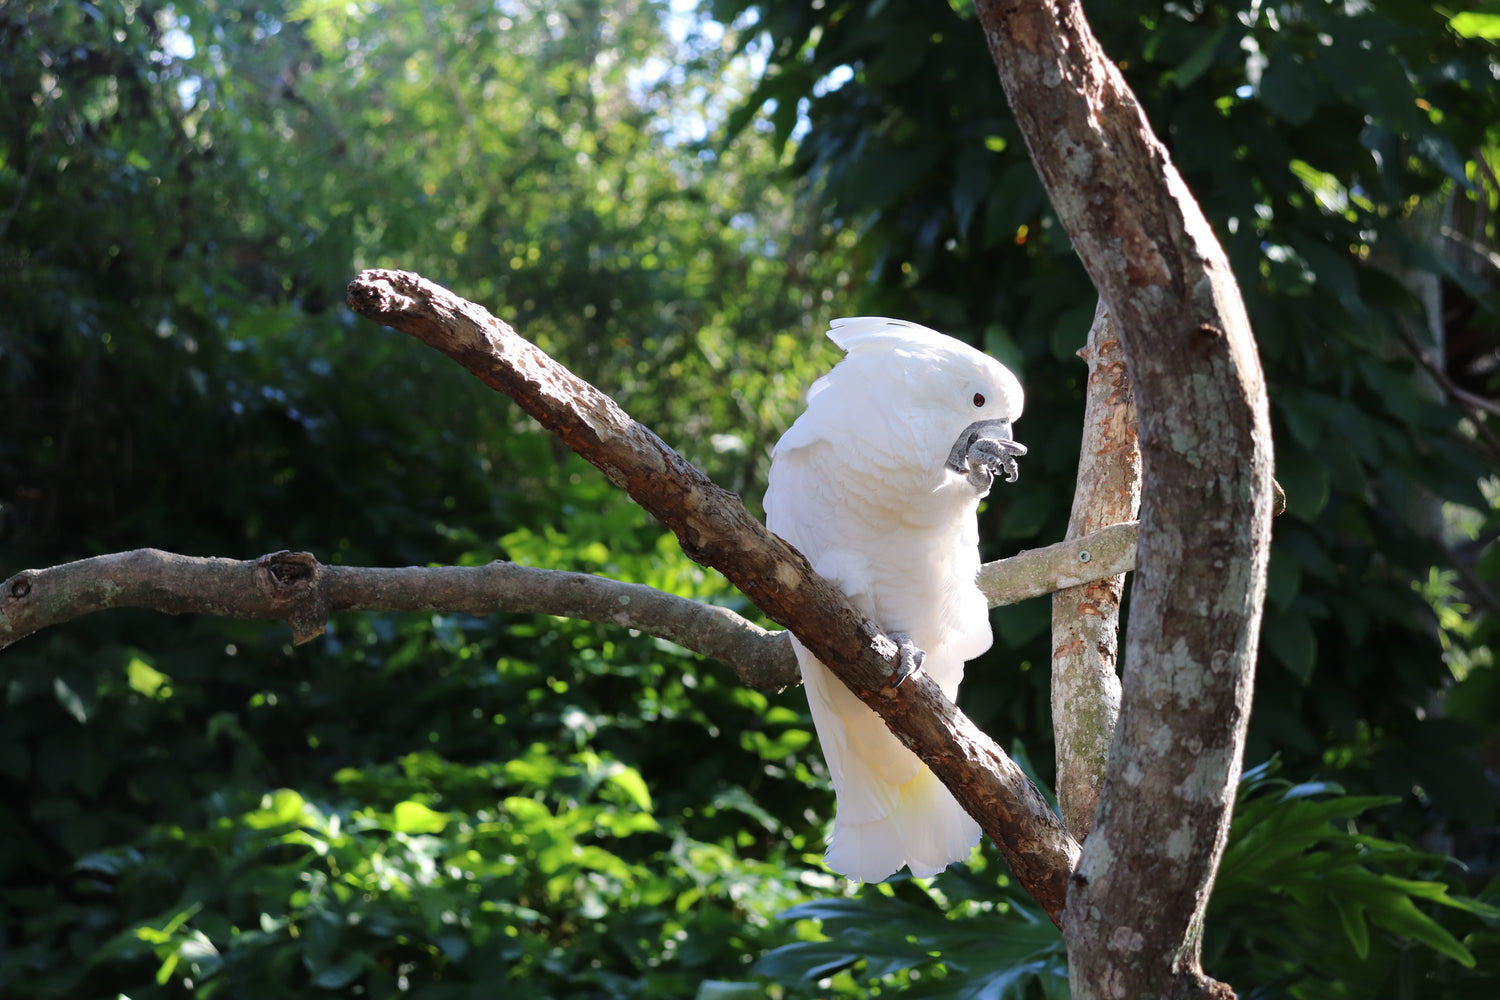 An Umbrella Cockatoo in a tree.